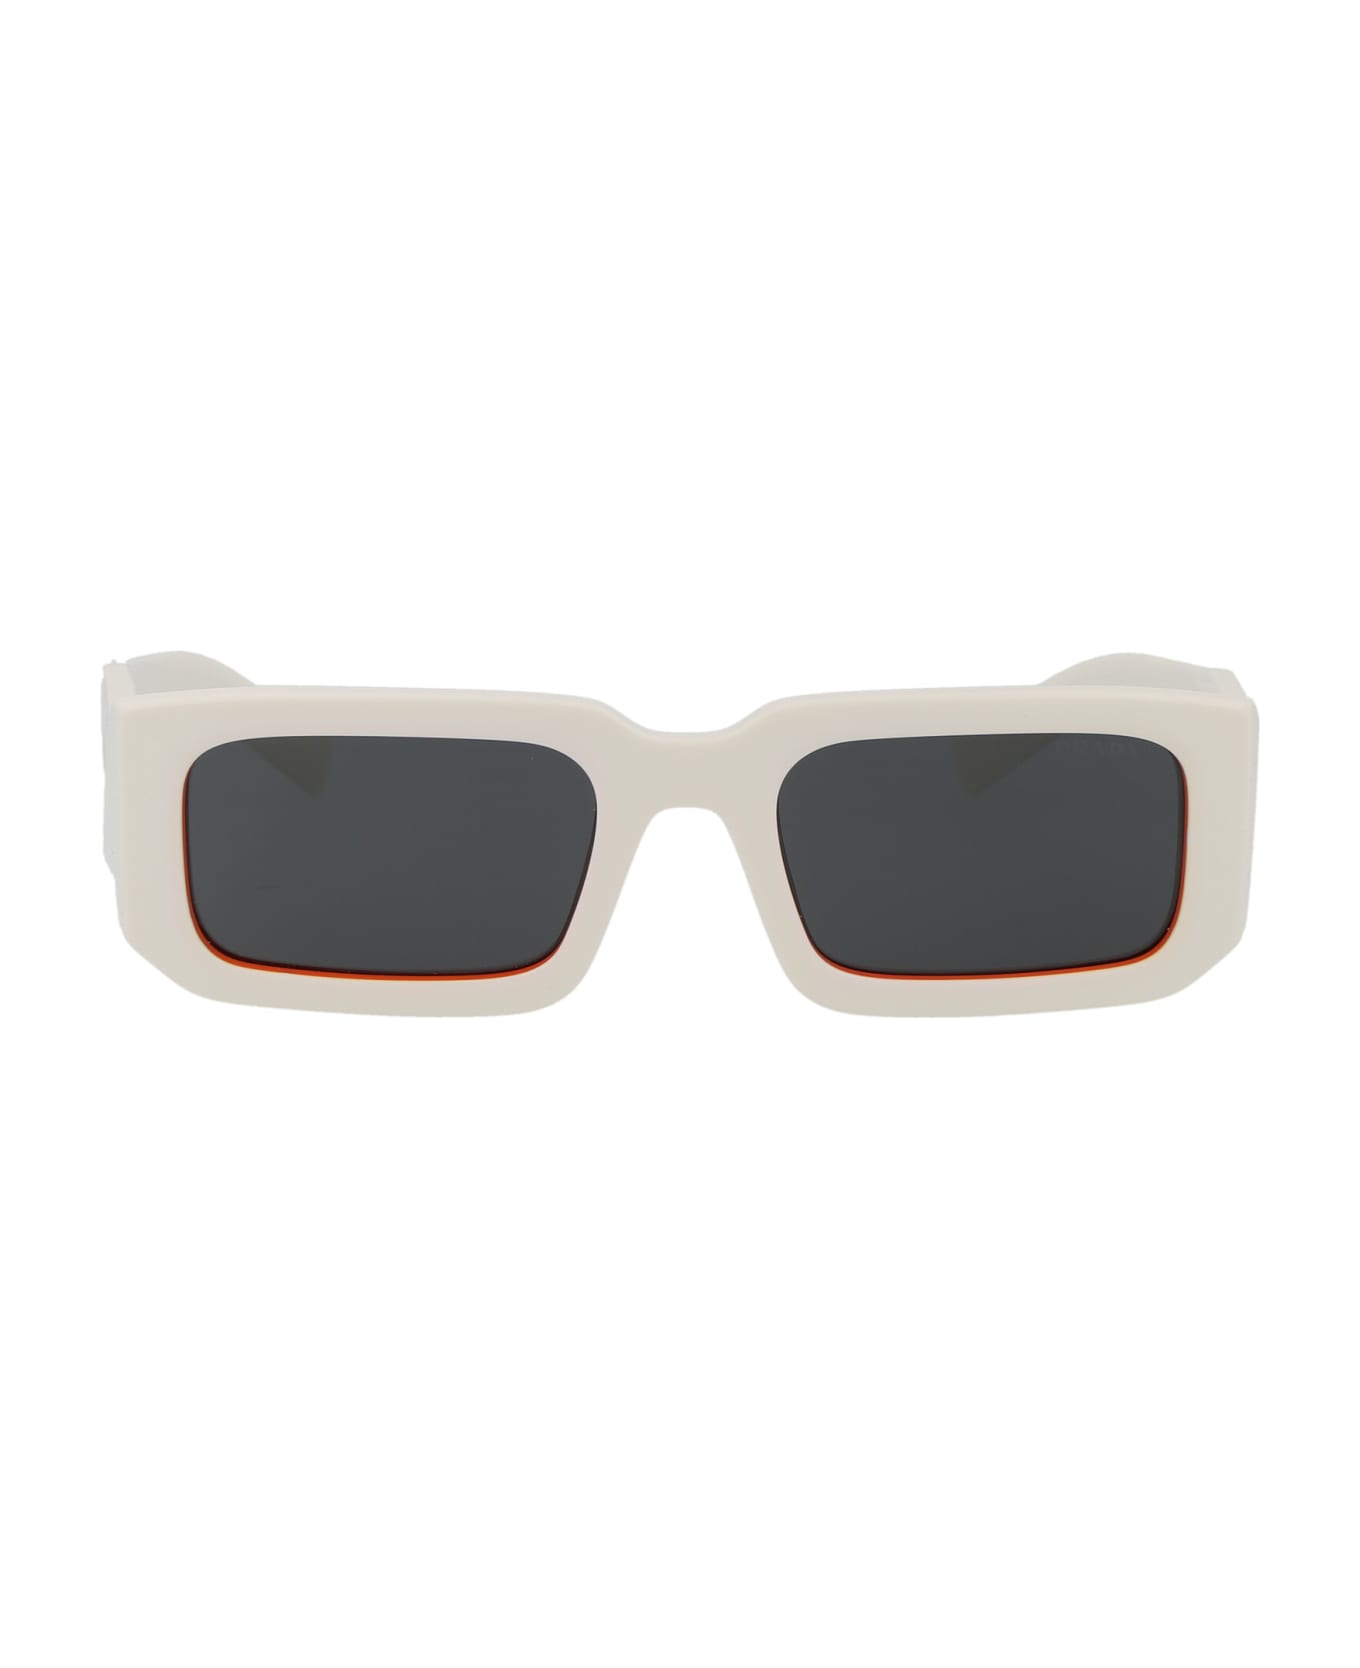 Prada Eyewear 0pr 06ys Sunglasses - 17M5S0 Talc/Orange